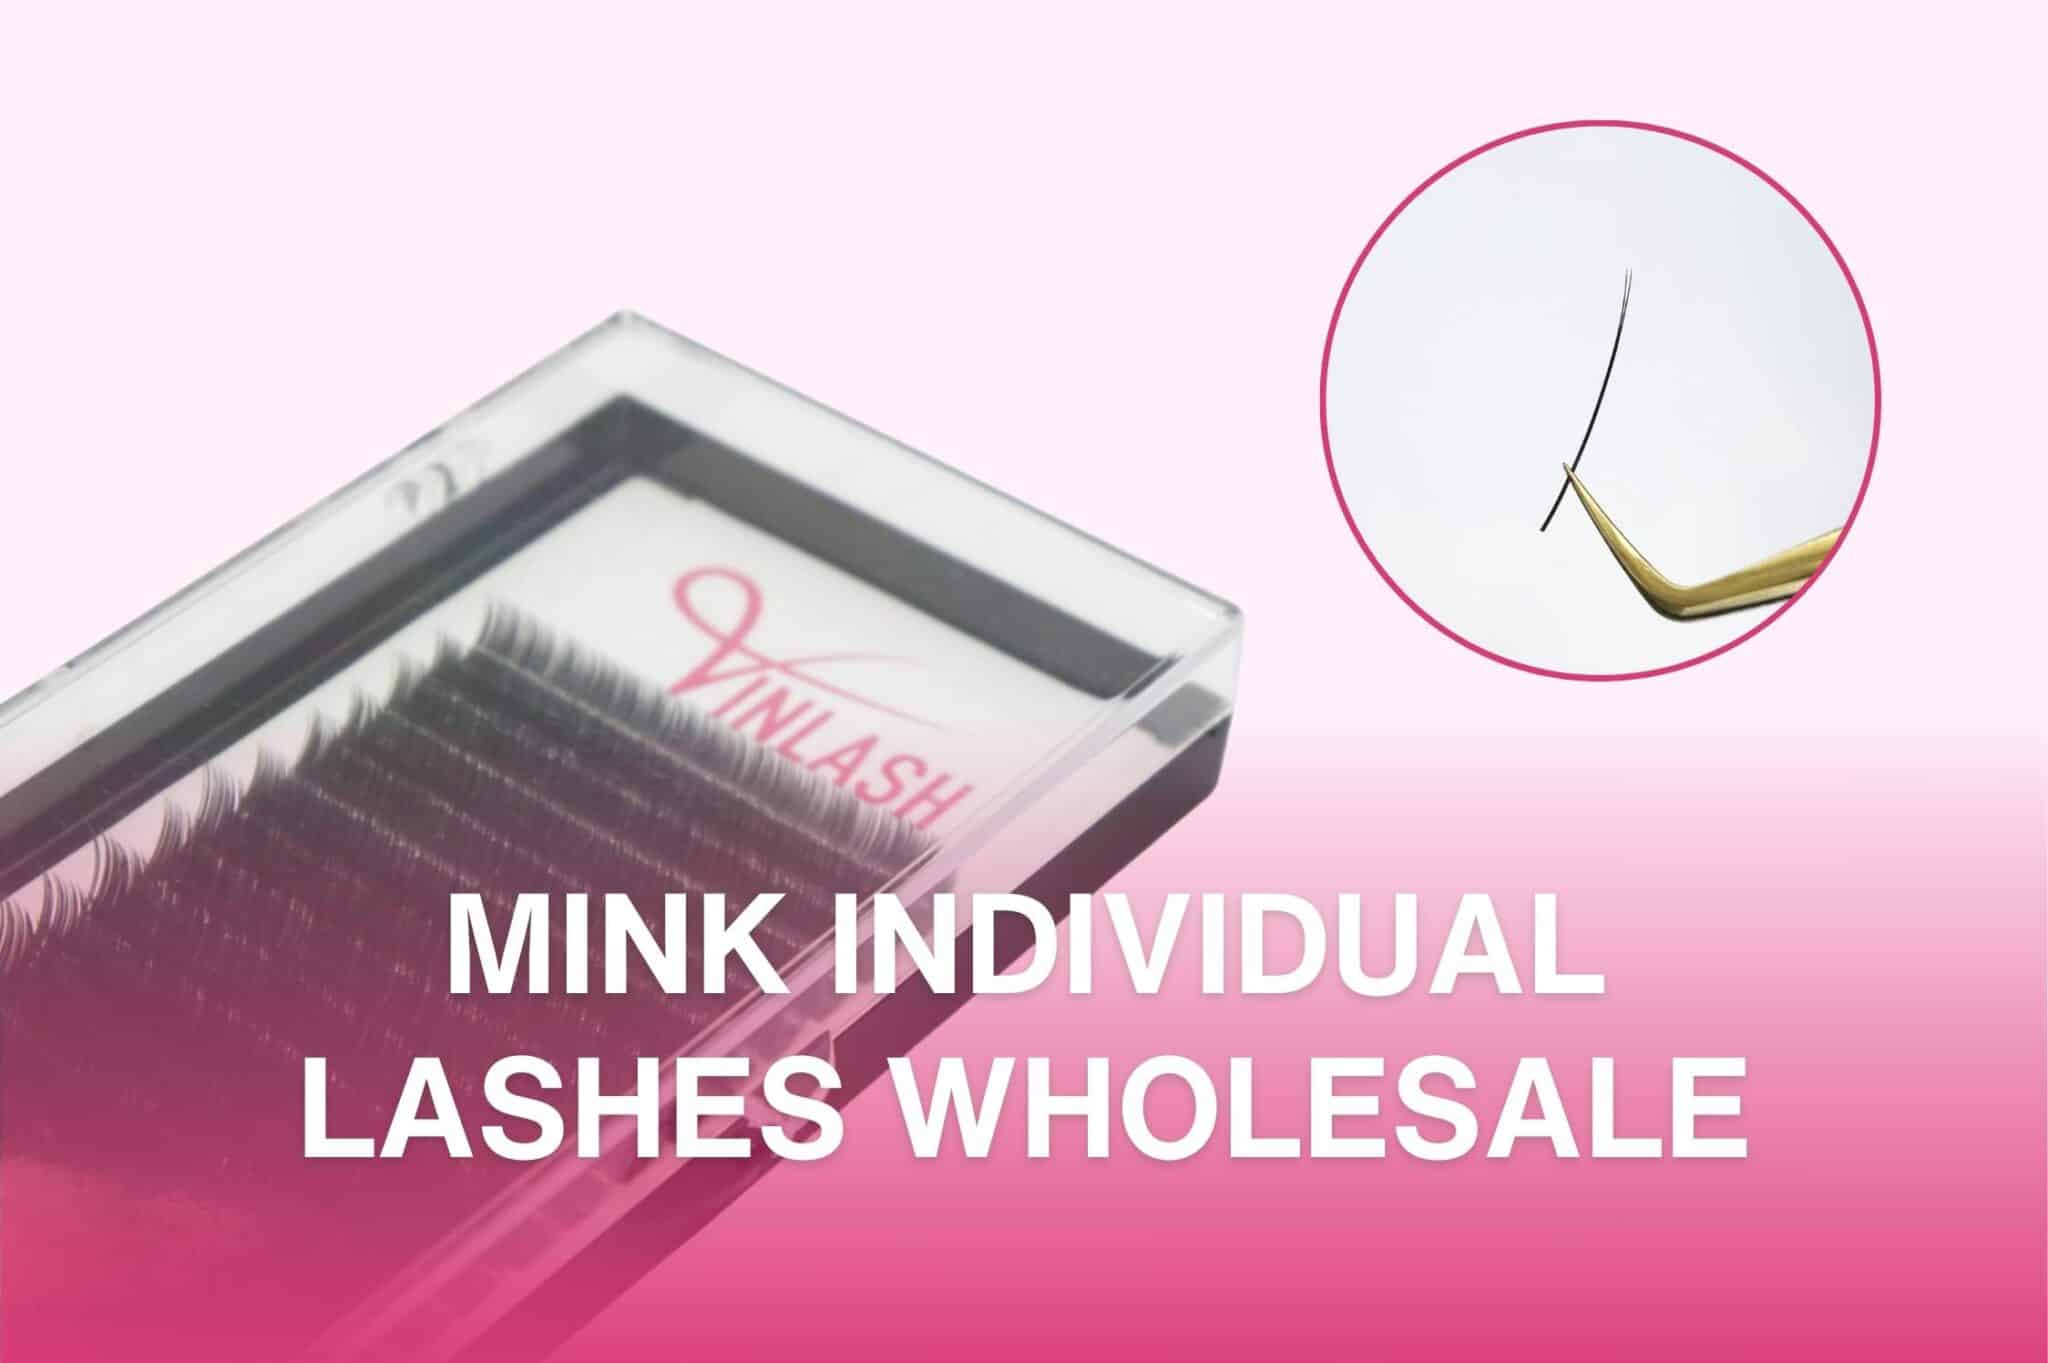 Mink Individual Lashes Wholesale tag